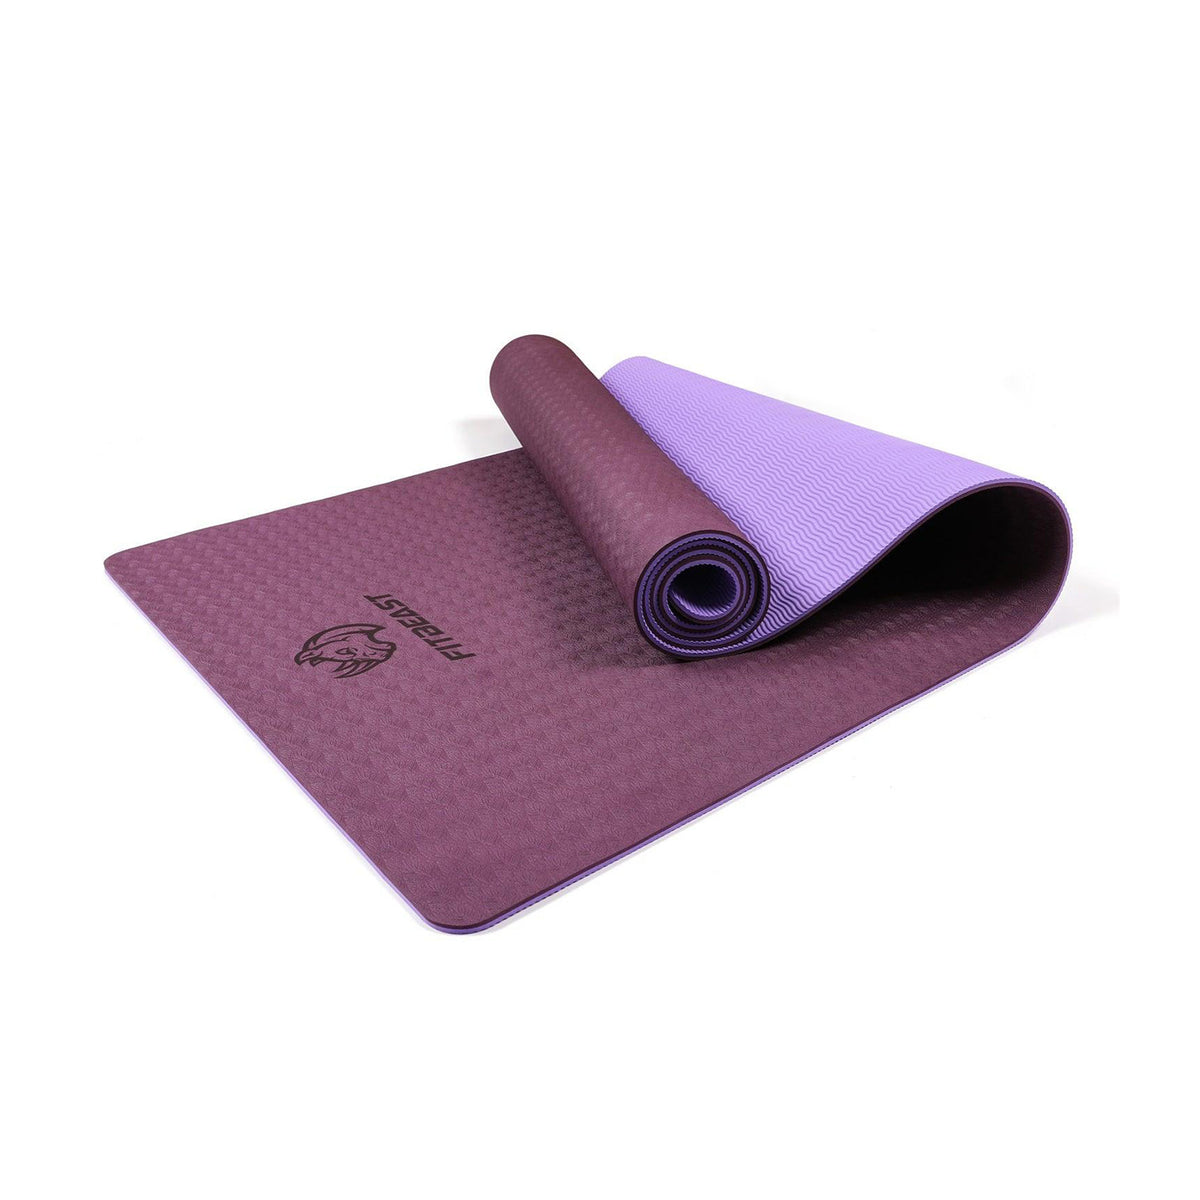 6mm Thick Non-Slip Yoga Mat for Sweaty Hands丨FitBeast